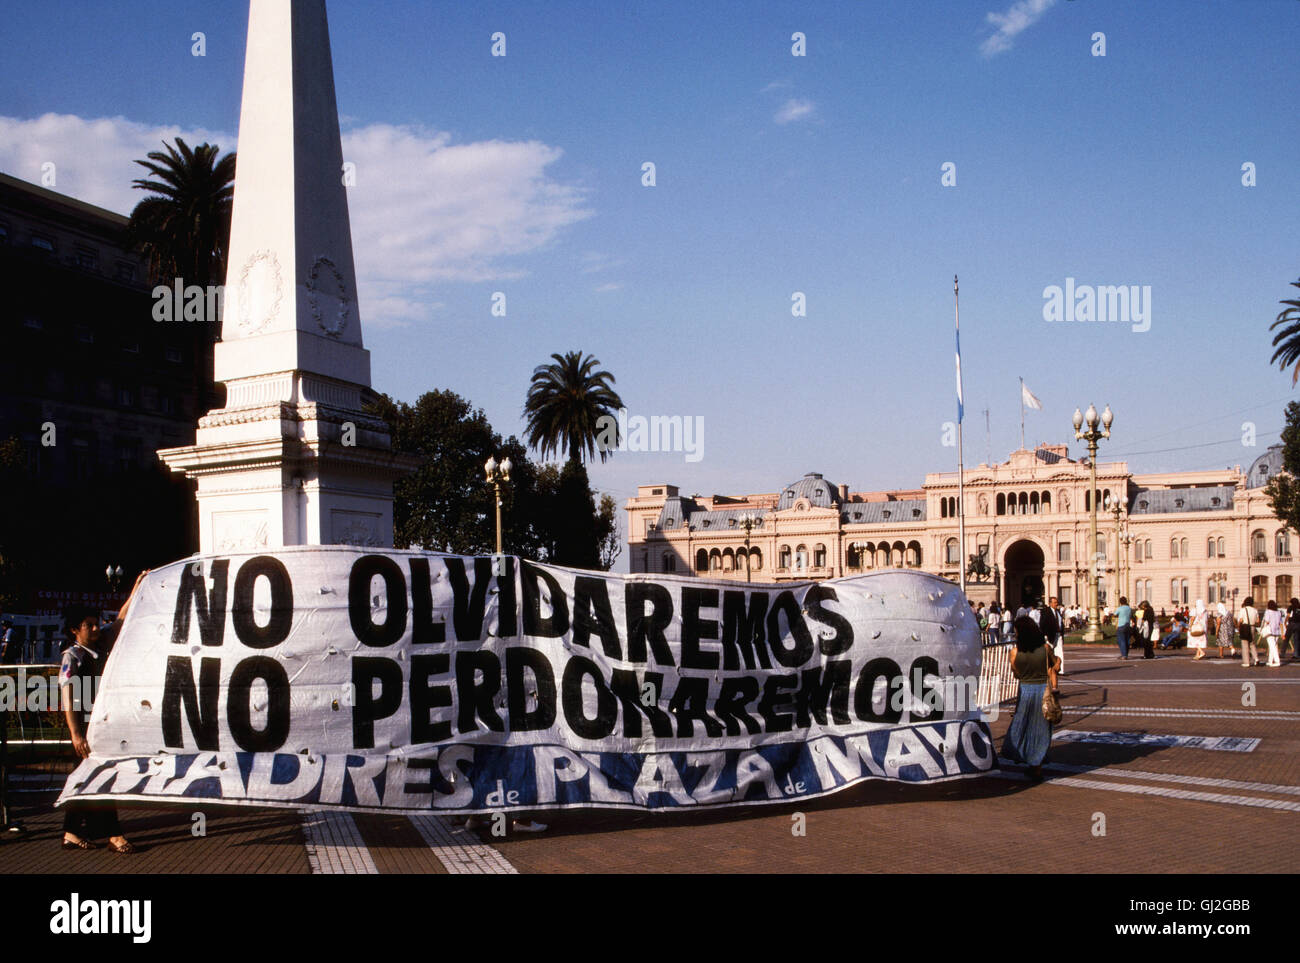 Madres de Plaza de Mayo, manifestation de protestation, Casa Rosada, Plaza 25 de mayo, Buenos Aires, Argentine, Amérique du Sud Banque D'Images